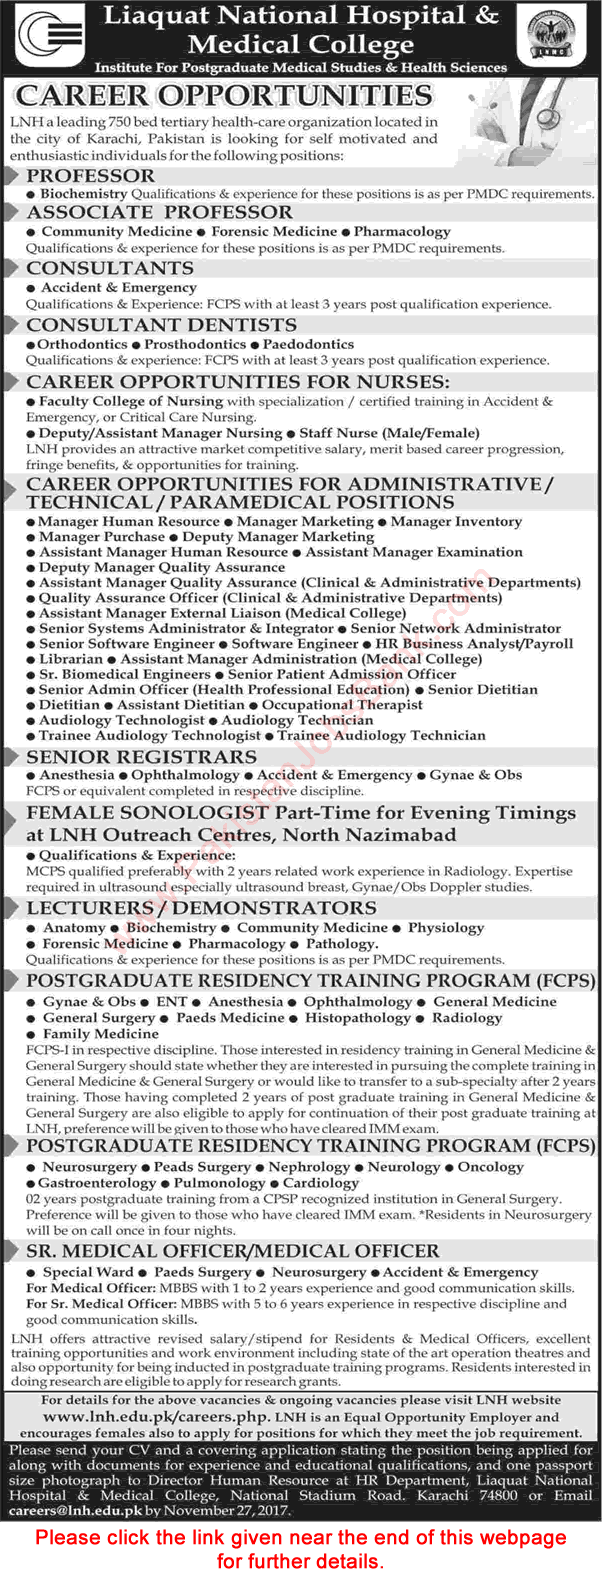 Liaquat National Hospital Karachi Jobs November 2017 Medical Officers, Admin Staff & Others LNH&MC Latest